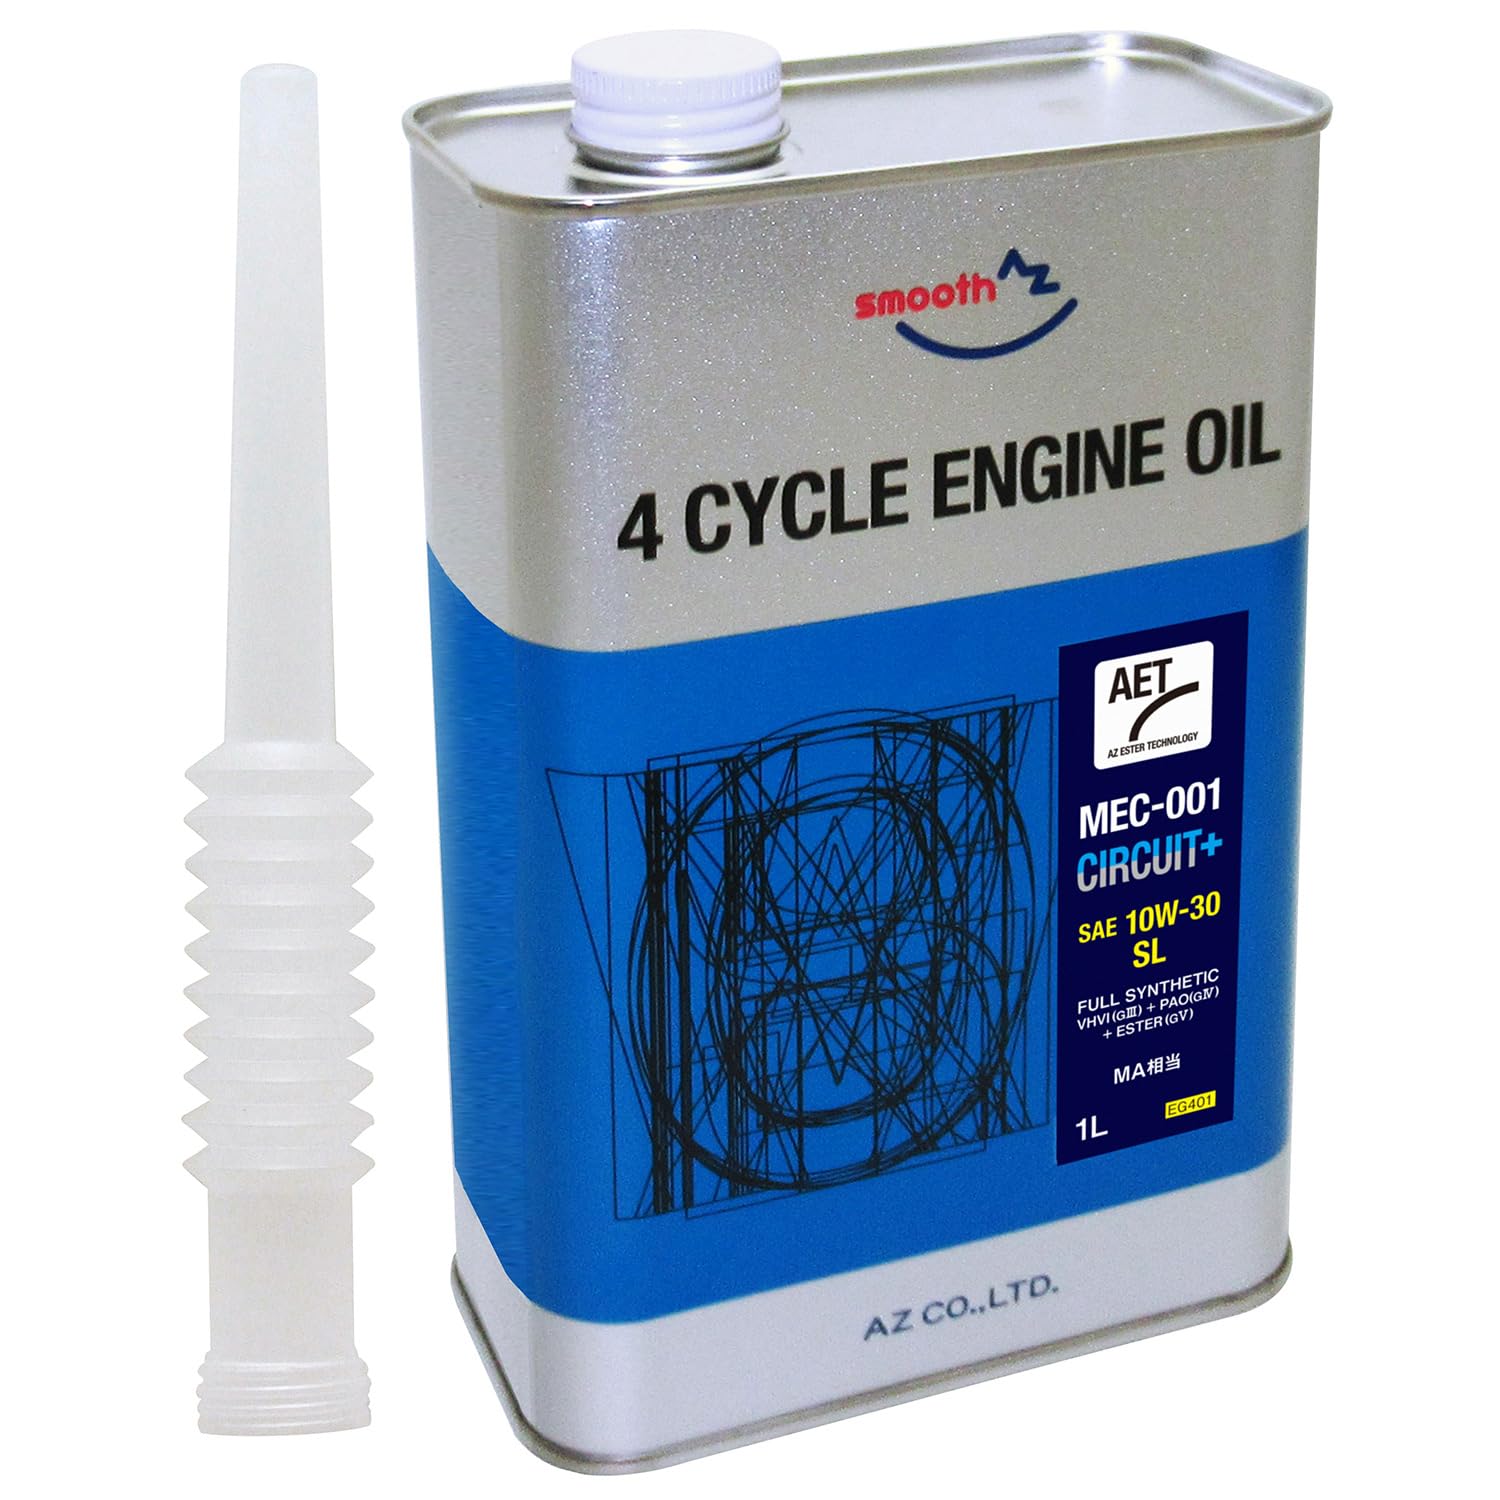 AZ(エーゼット) バイク用 4サイクル エンジンオイル MEC-001 サーキット プラス AET 10W-30 1L 100%化学合成油 エステル配合 2輪用 EG401